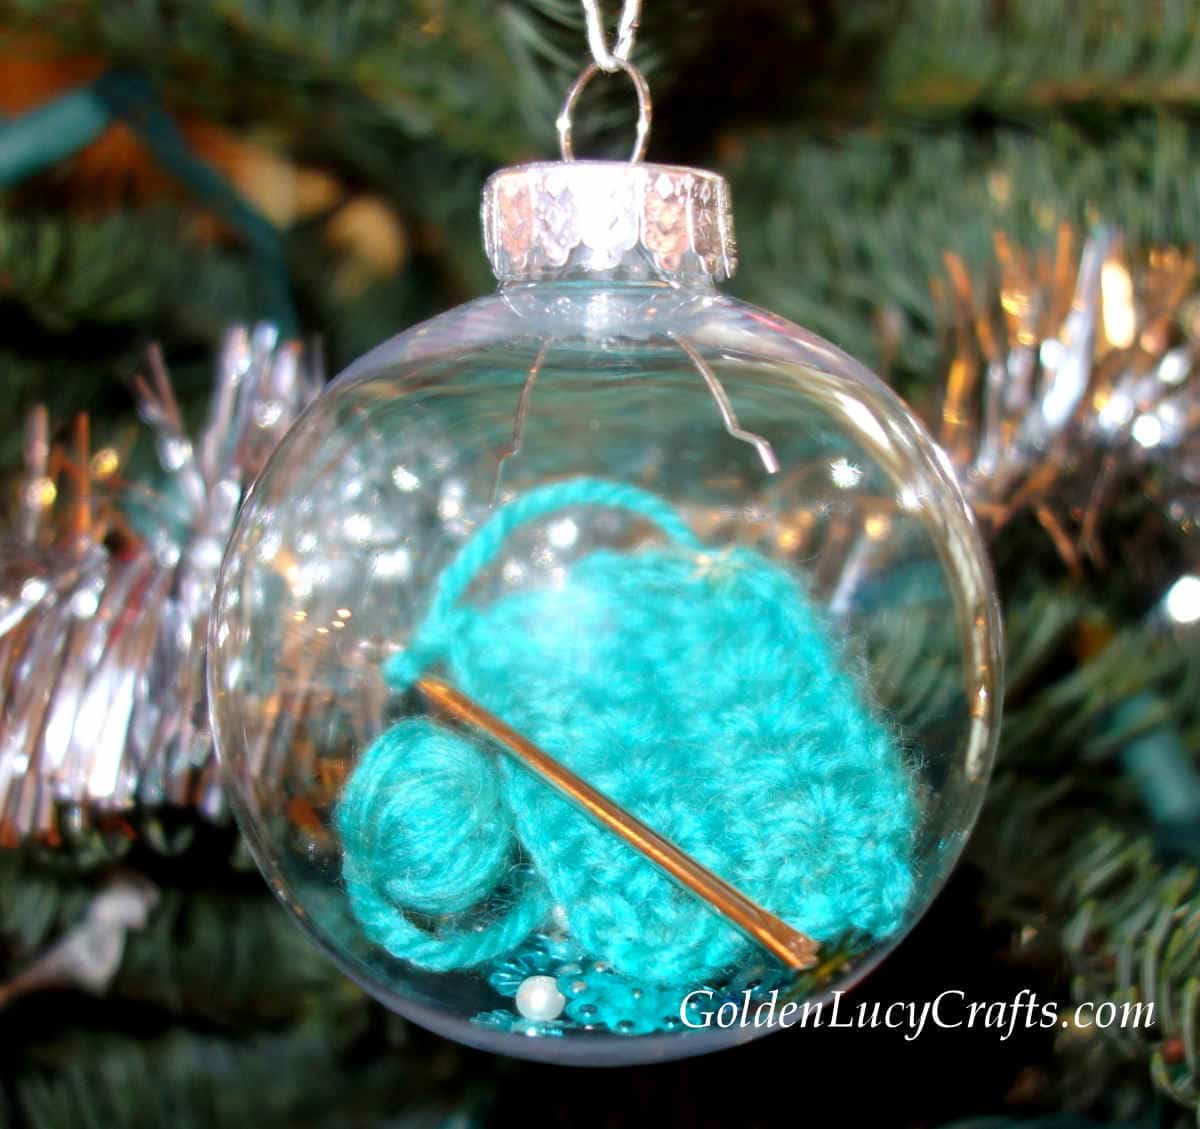 Crochet themed clear ball ornament on the Christmas tree.